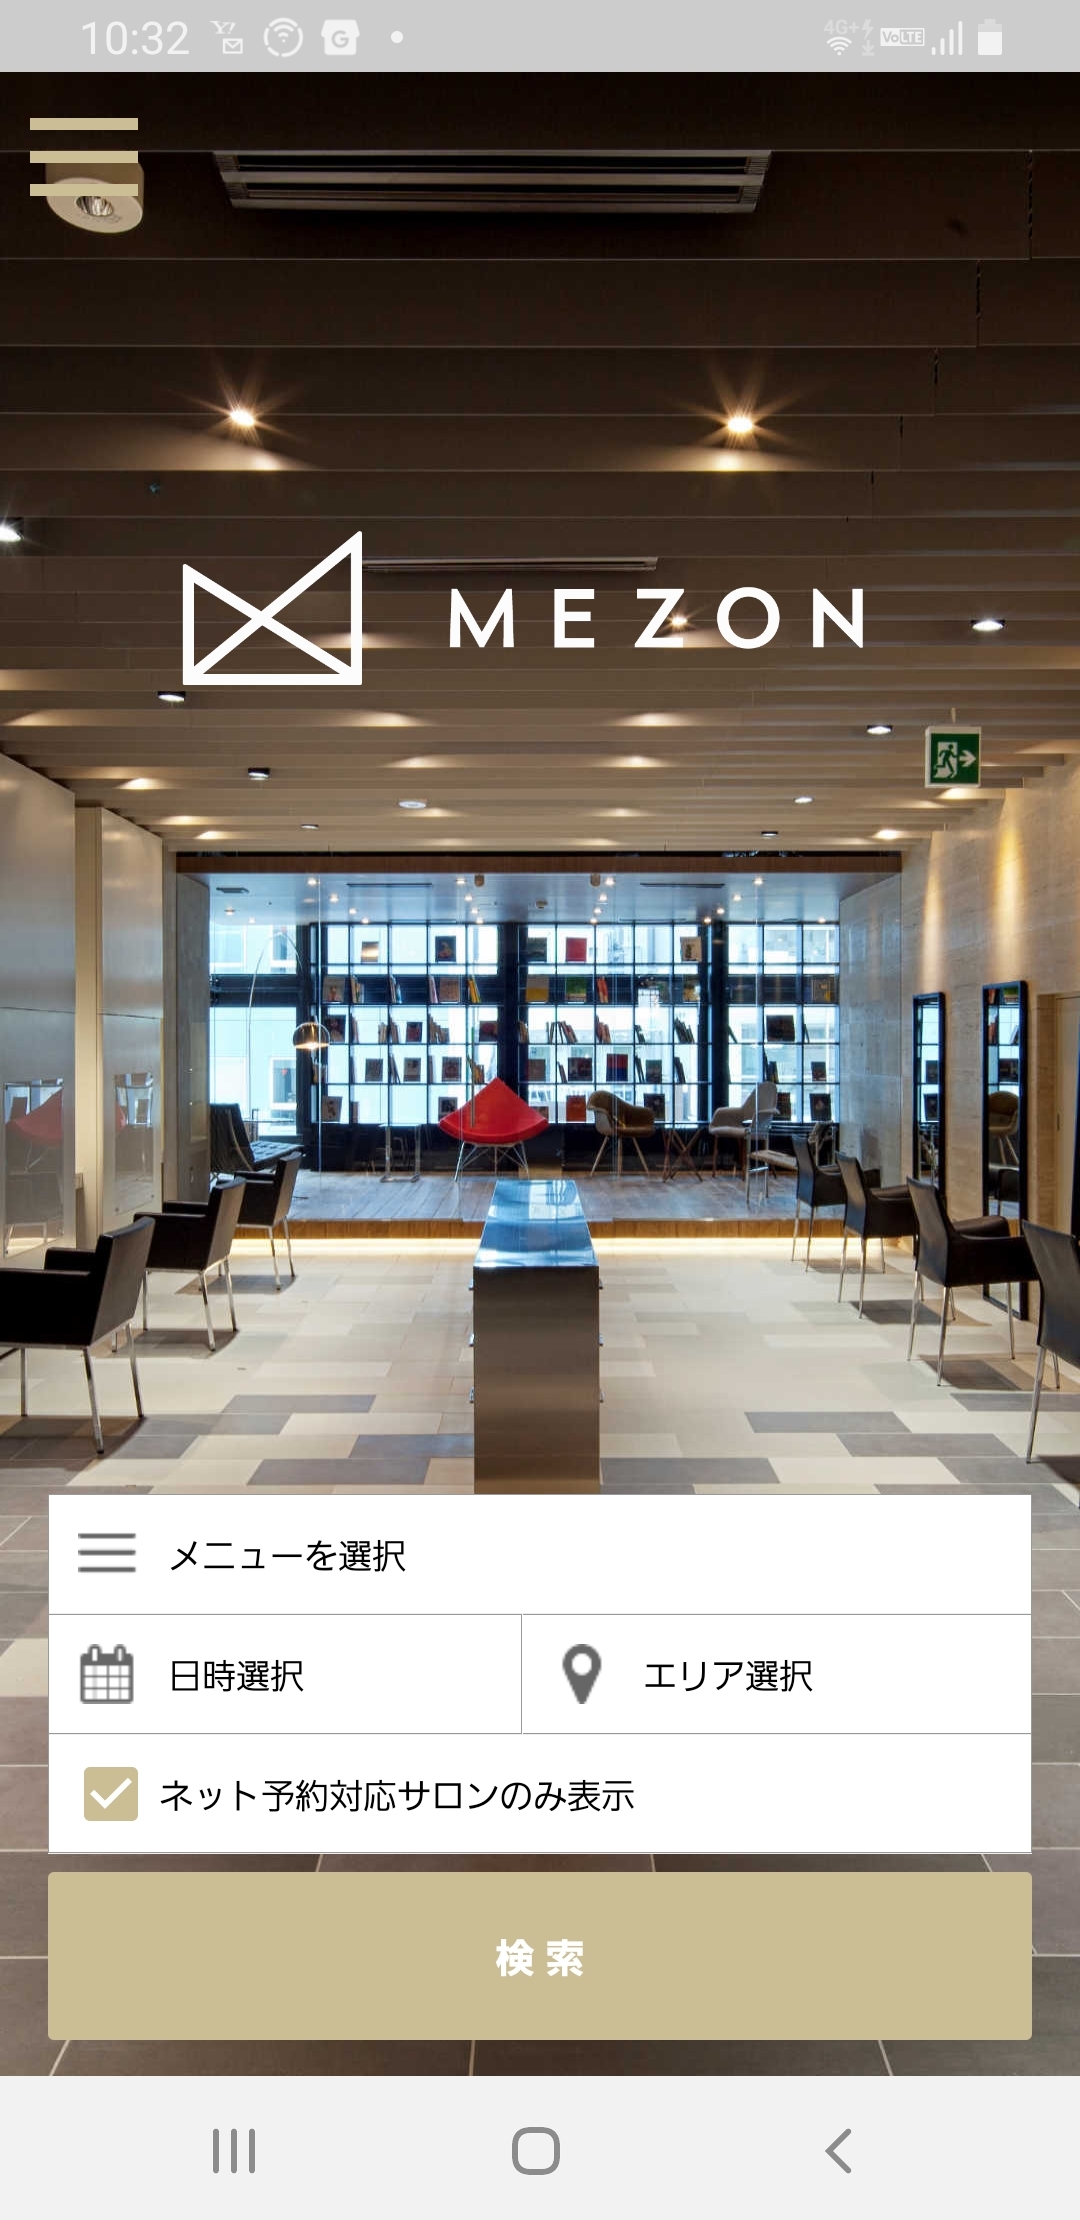 MEZONご利用可能店舗になりました。
定額利用美容室システムです。
MEZONで検索